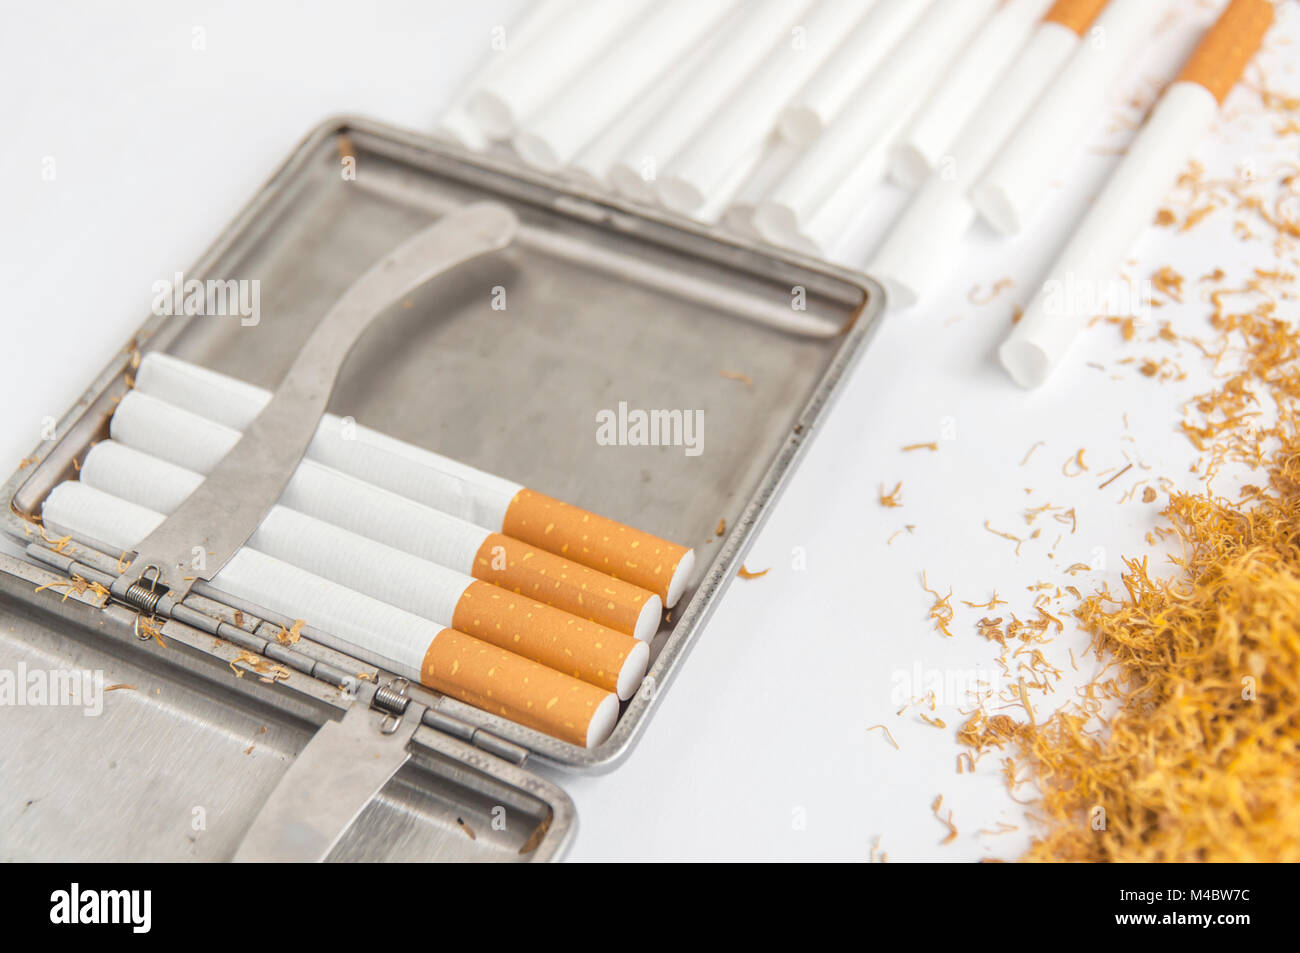 Cigarette metal box for tobacco and paper rolling cigarette Stock Photo